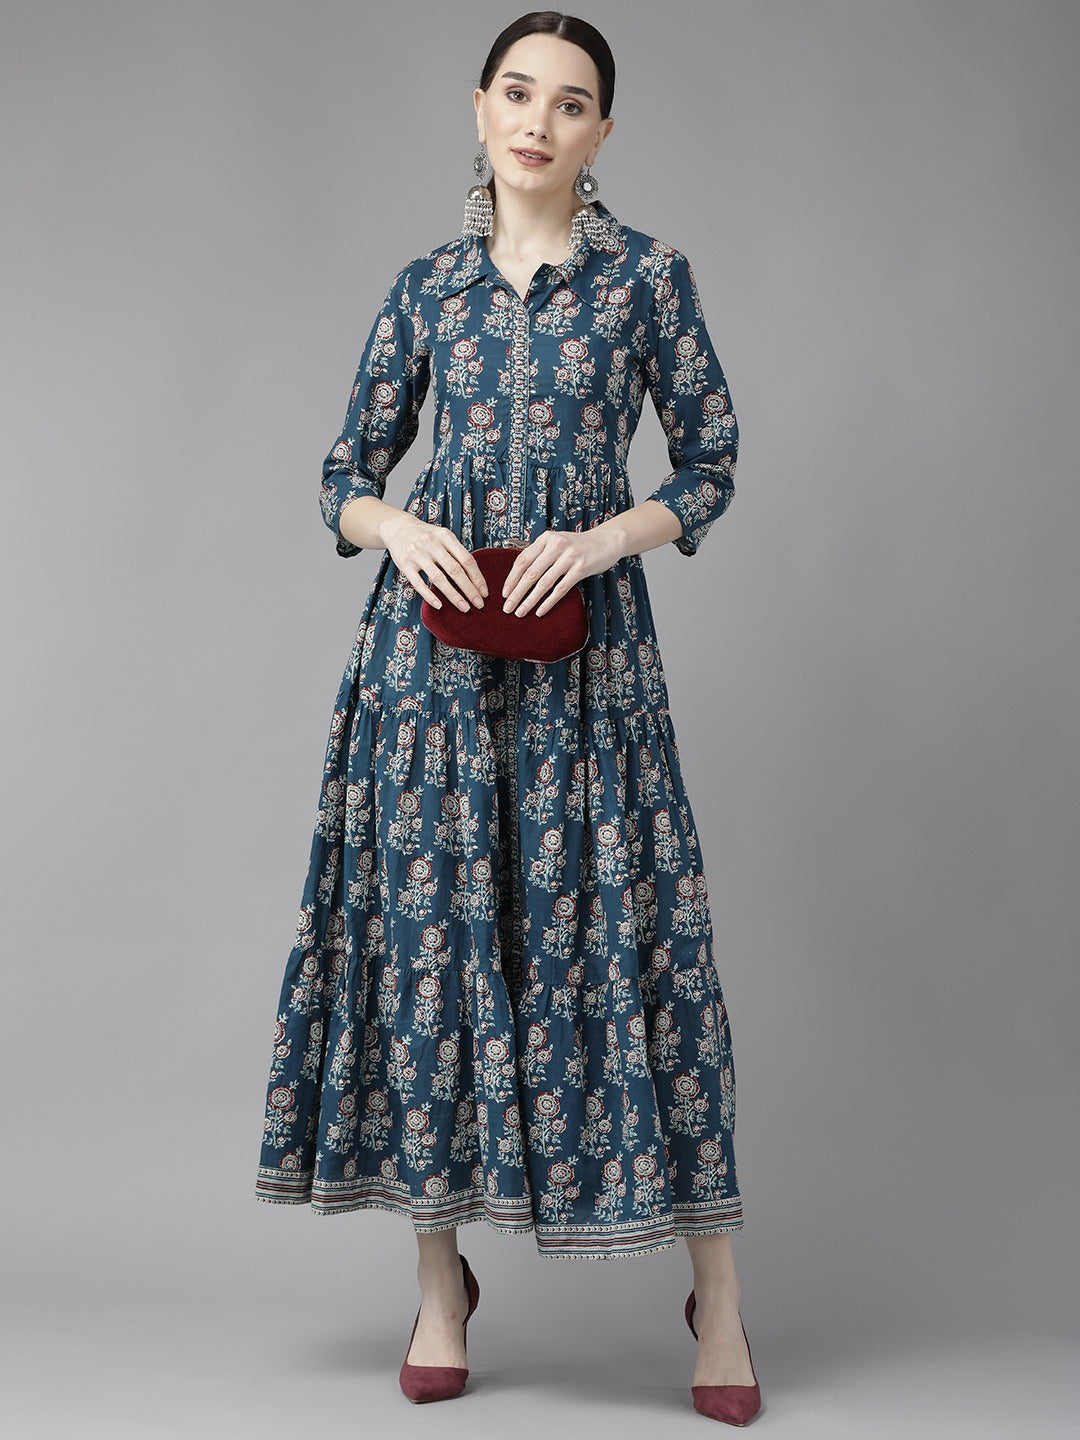 Blue Print Cotton Maxi Dress-Yufta Store-9690DRSBLS